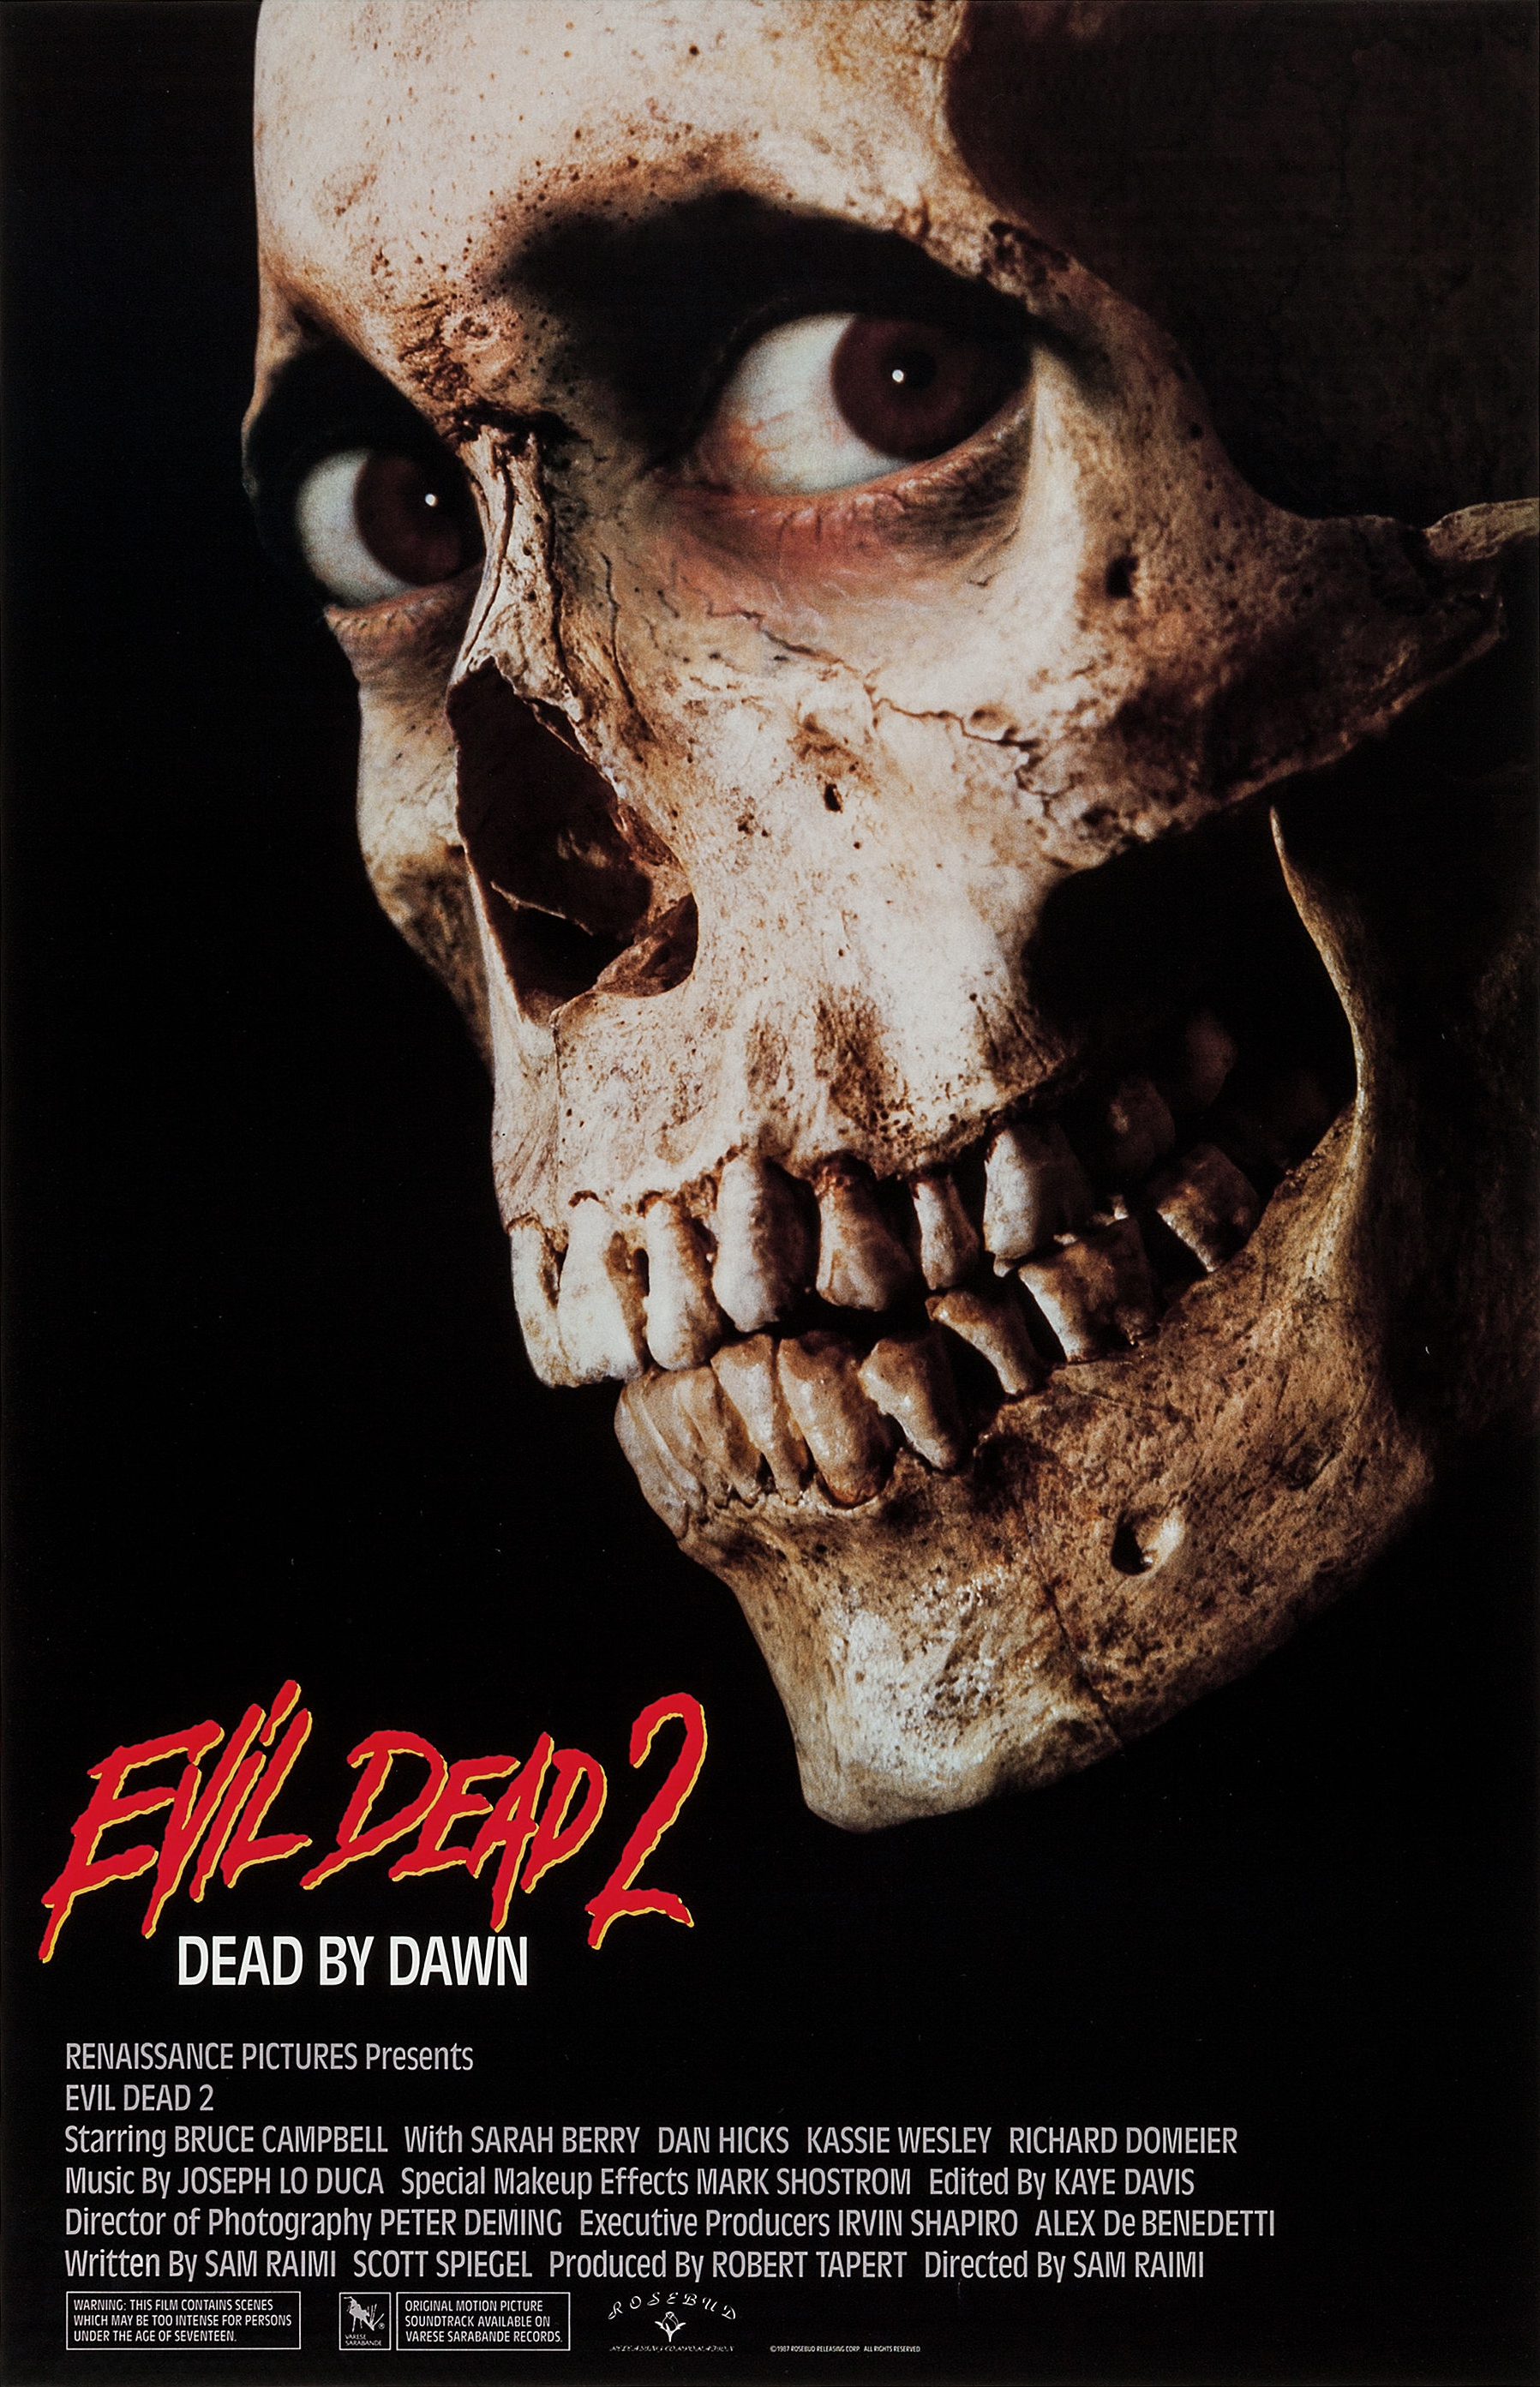 Nonton film Evil Dead II layarkaca21 indoxx1 ganool online streaming terbaru